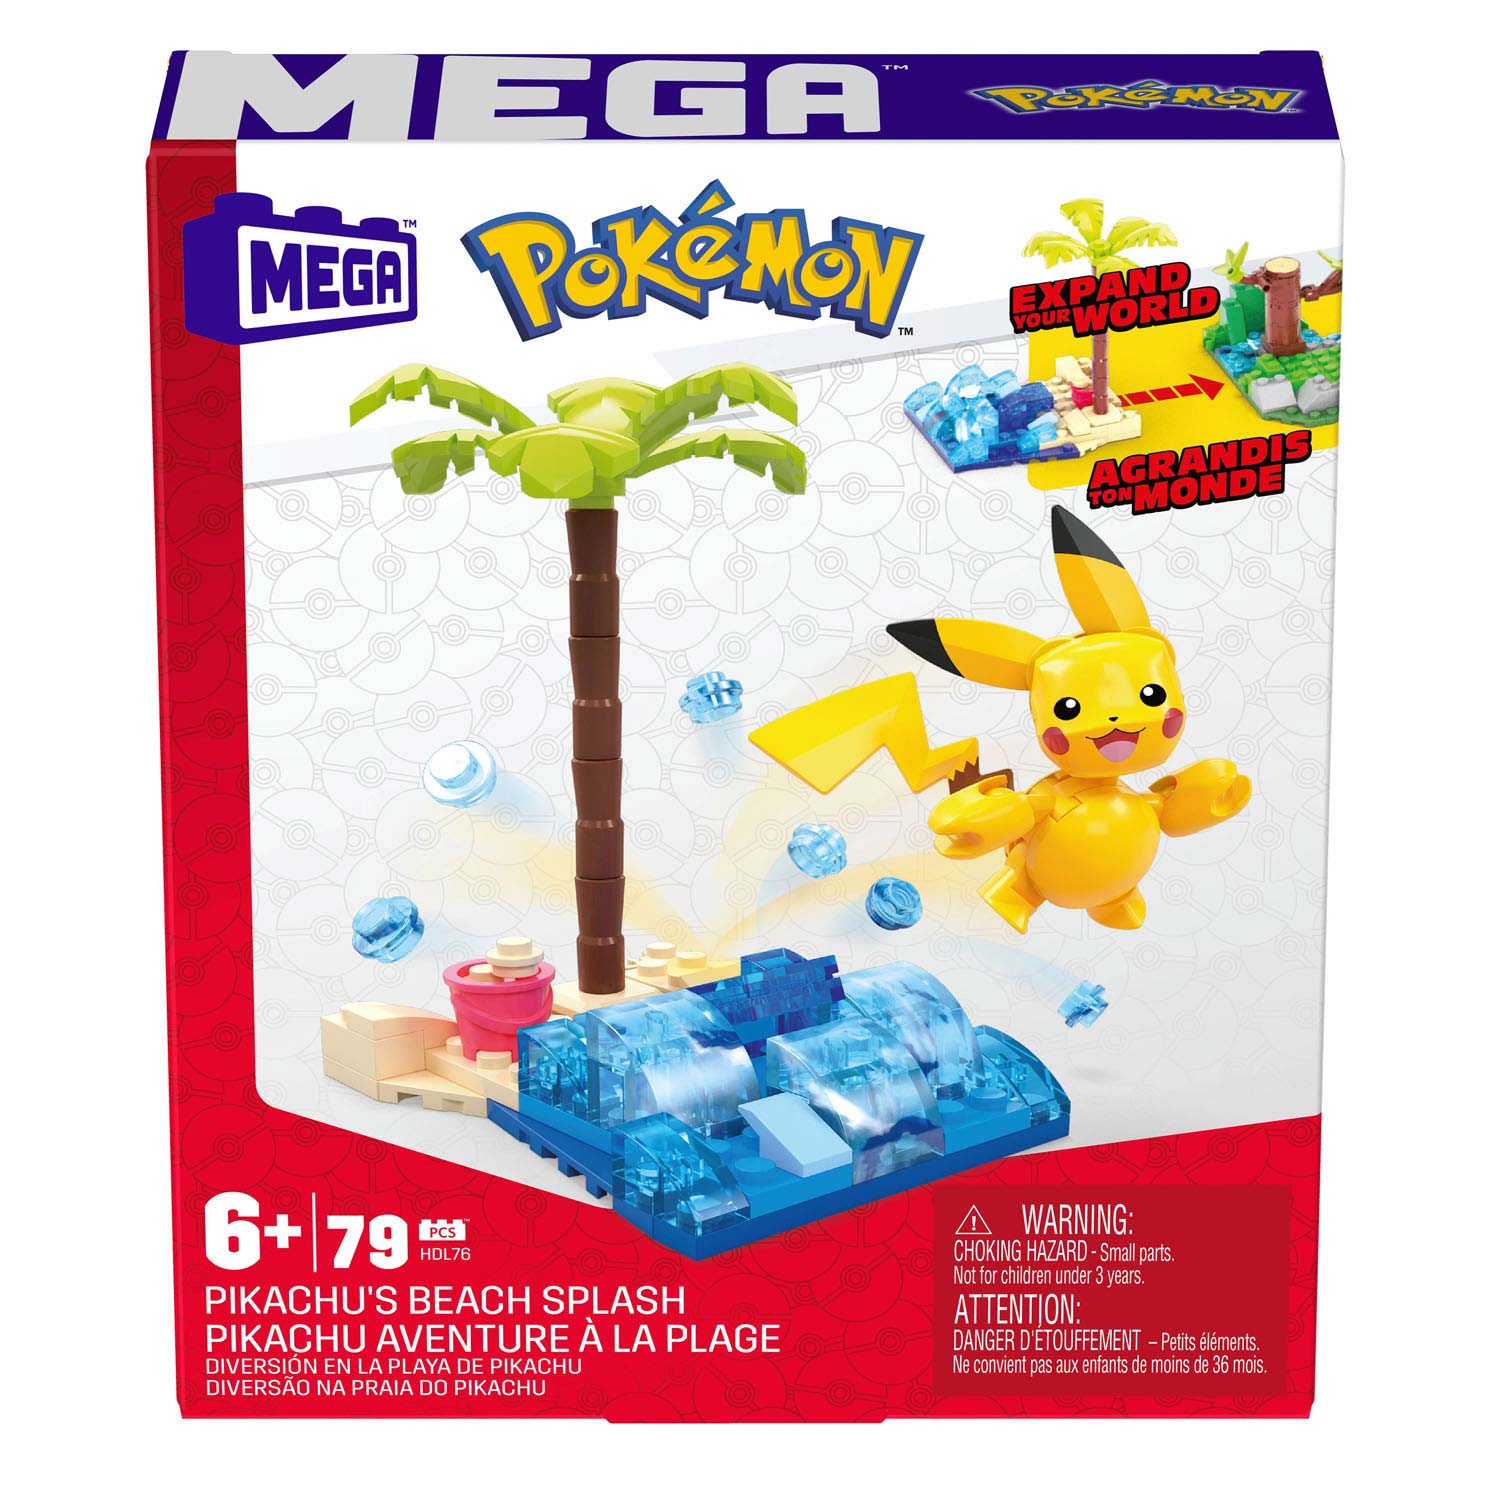 MEGA Construx Pokémon Pikachu Evolution Set